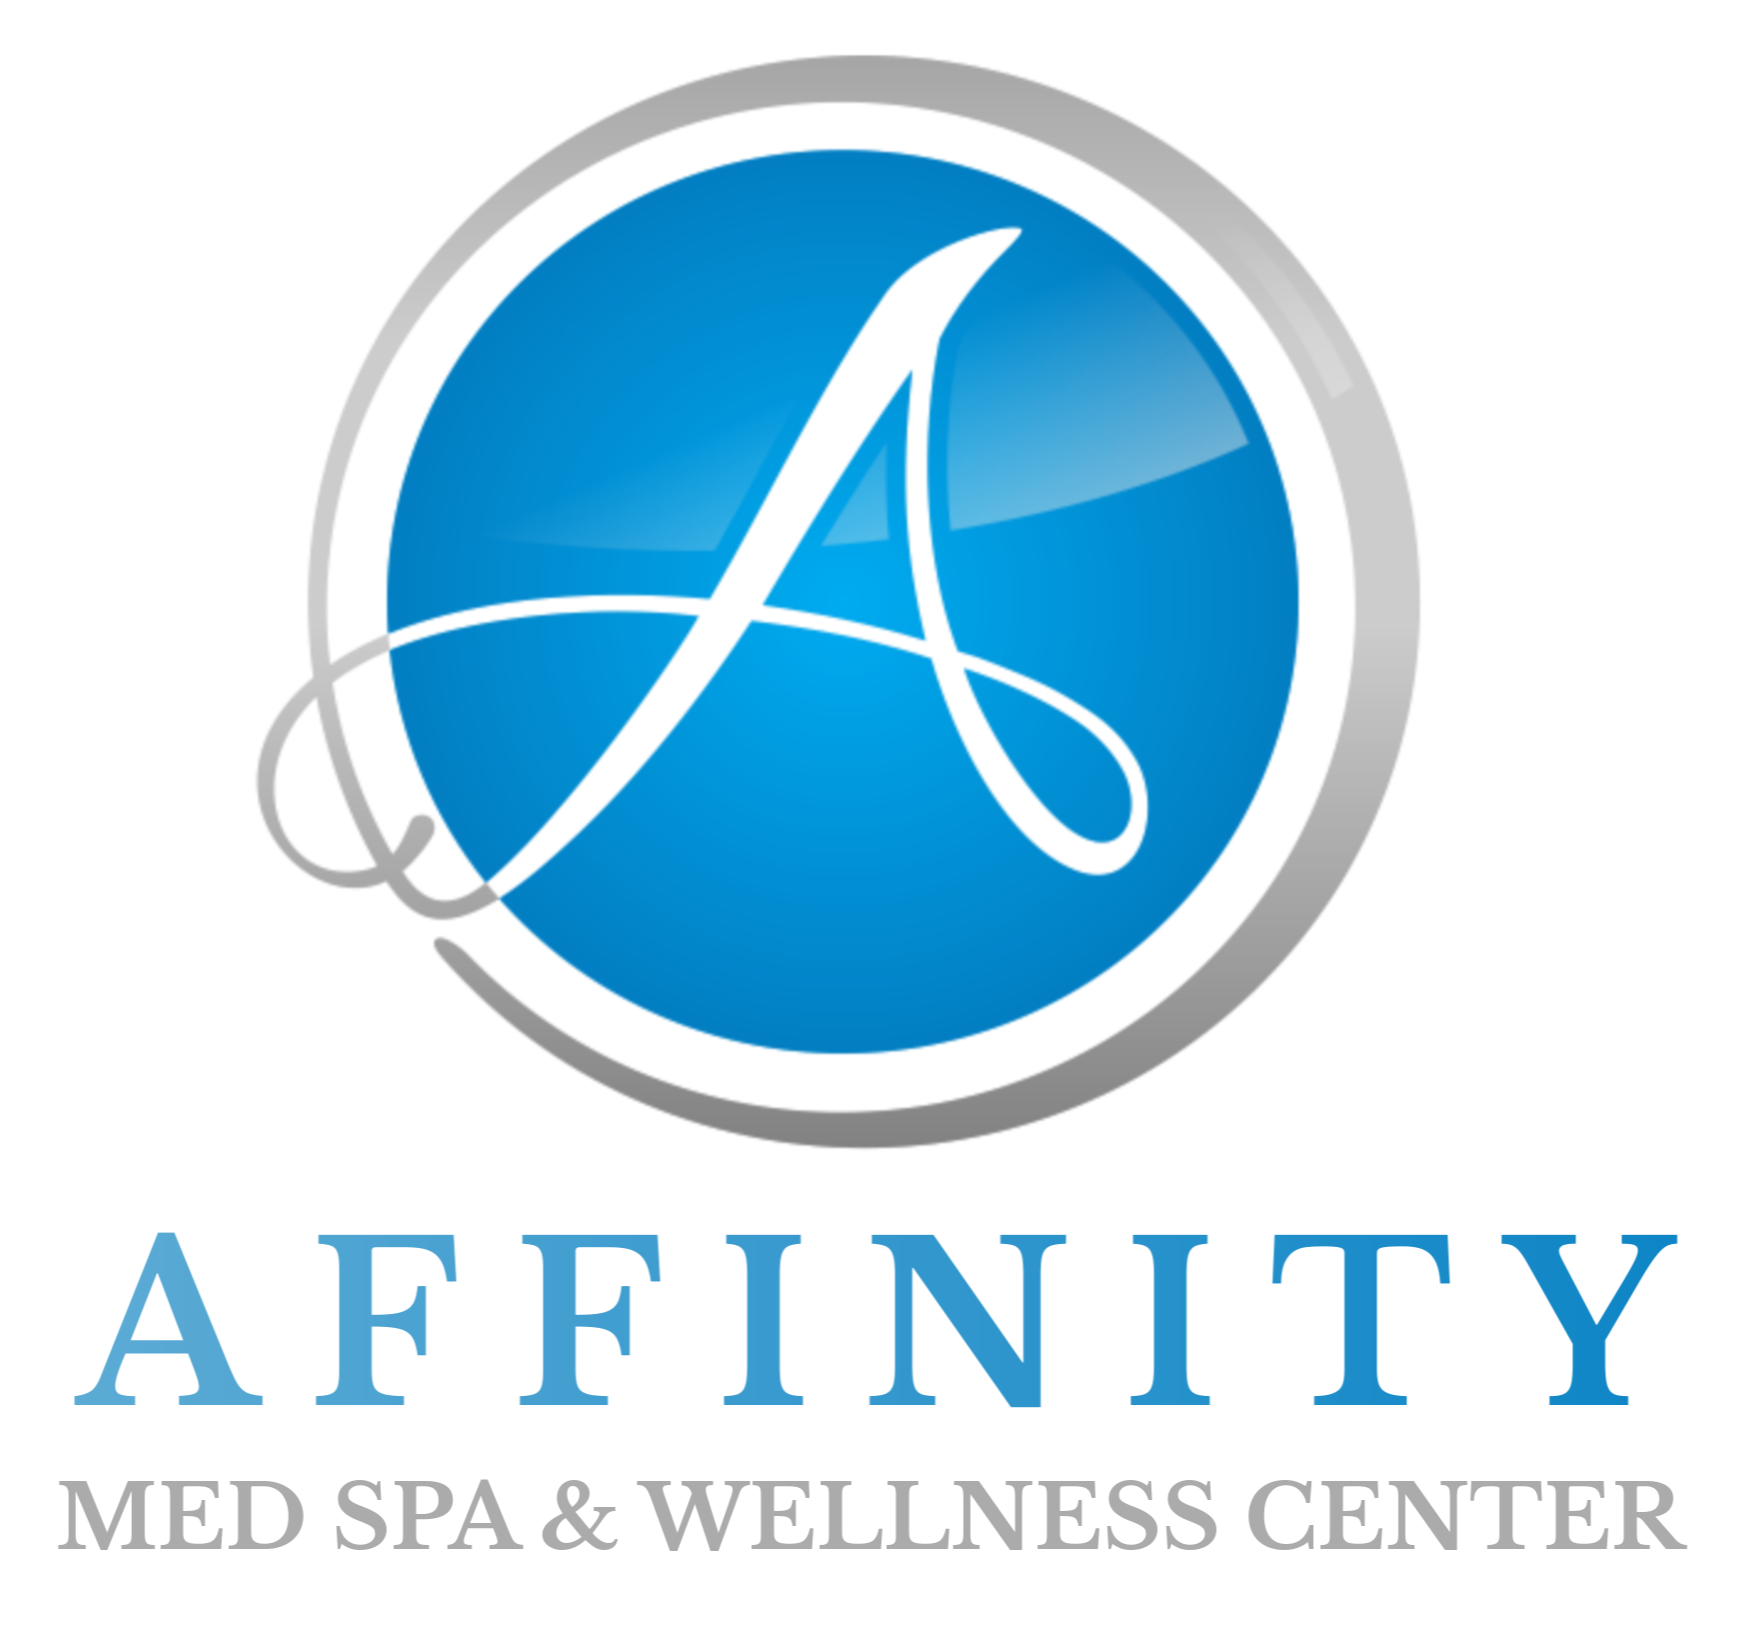 Affinity Med Spa & Wellness Center